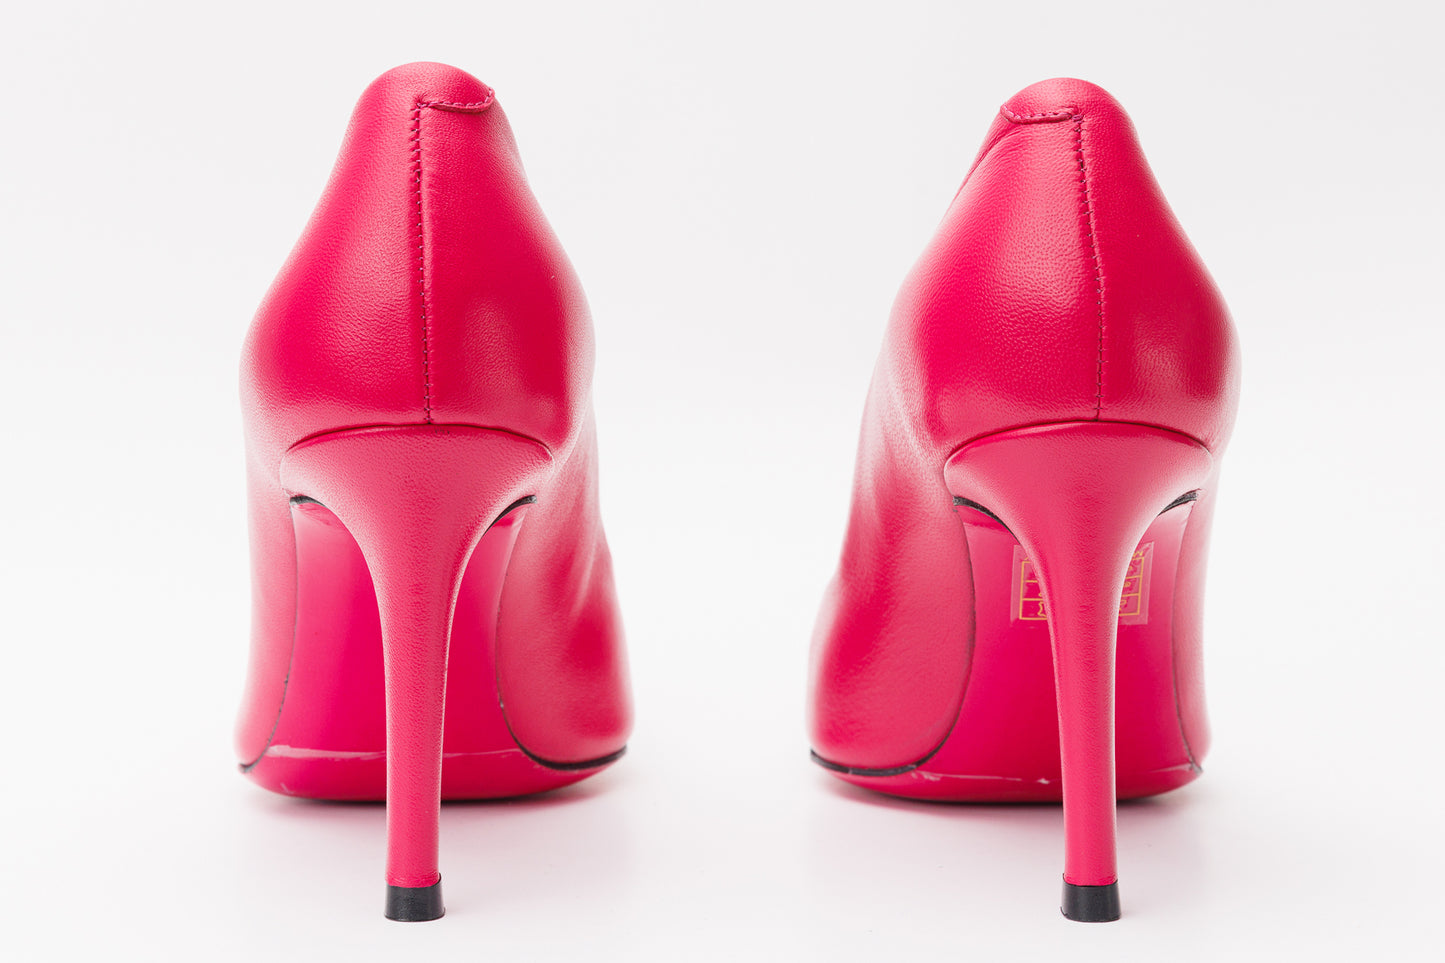 The Maneadero Pink Leather Pump Fuchsia Sole Women Shoe